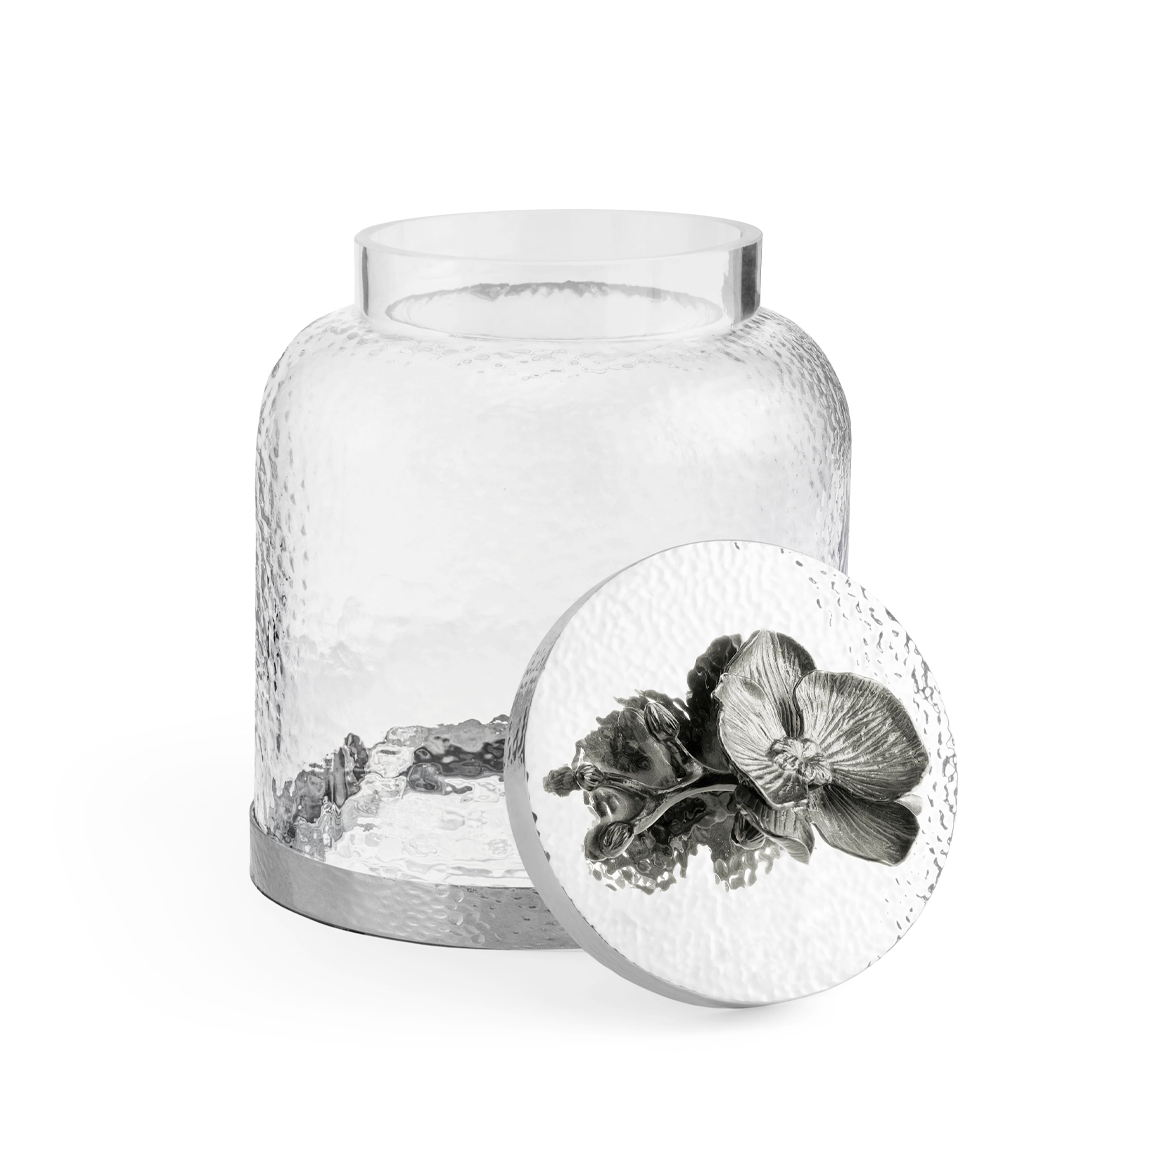 Black Orchid Cookie Jar, Michael Aram - RSVP Style